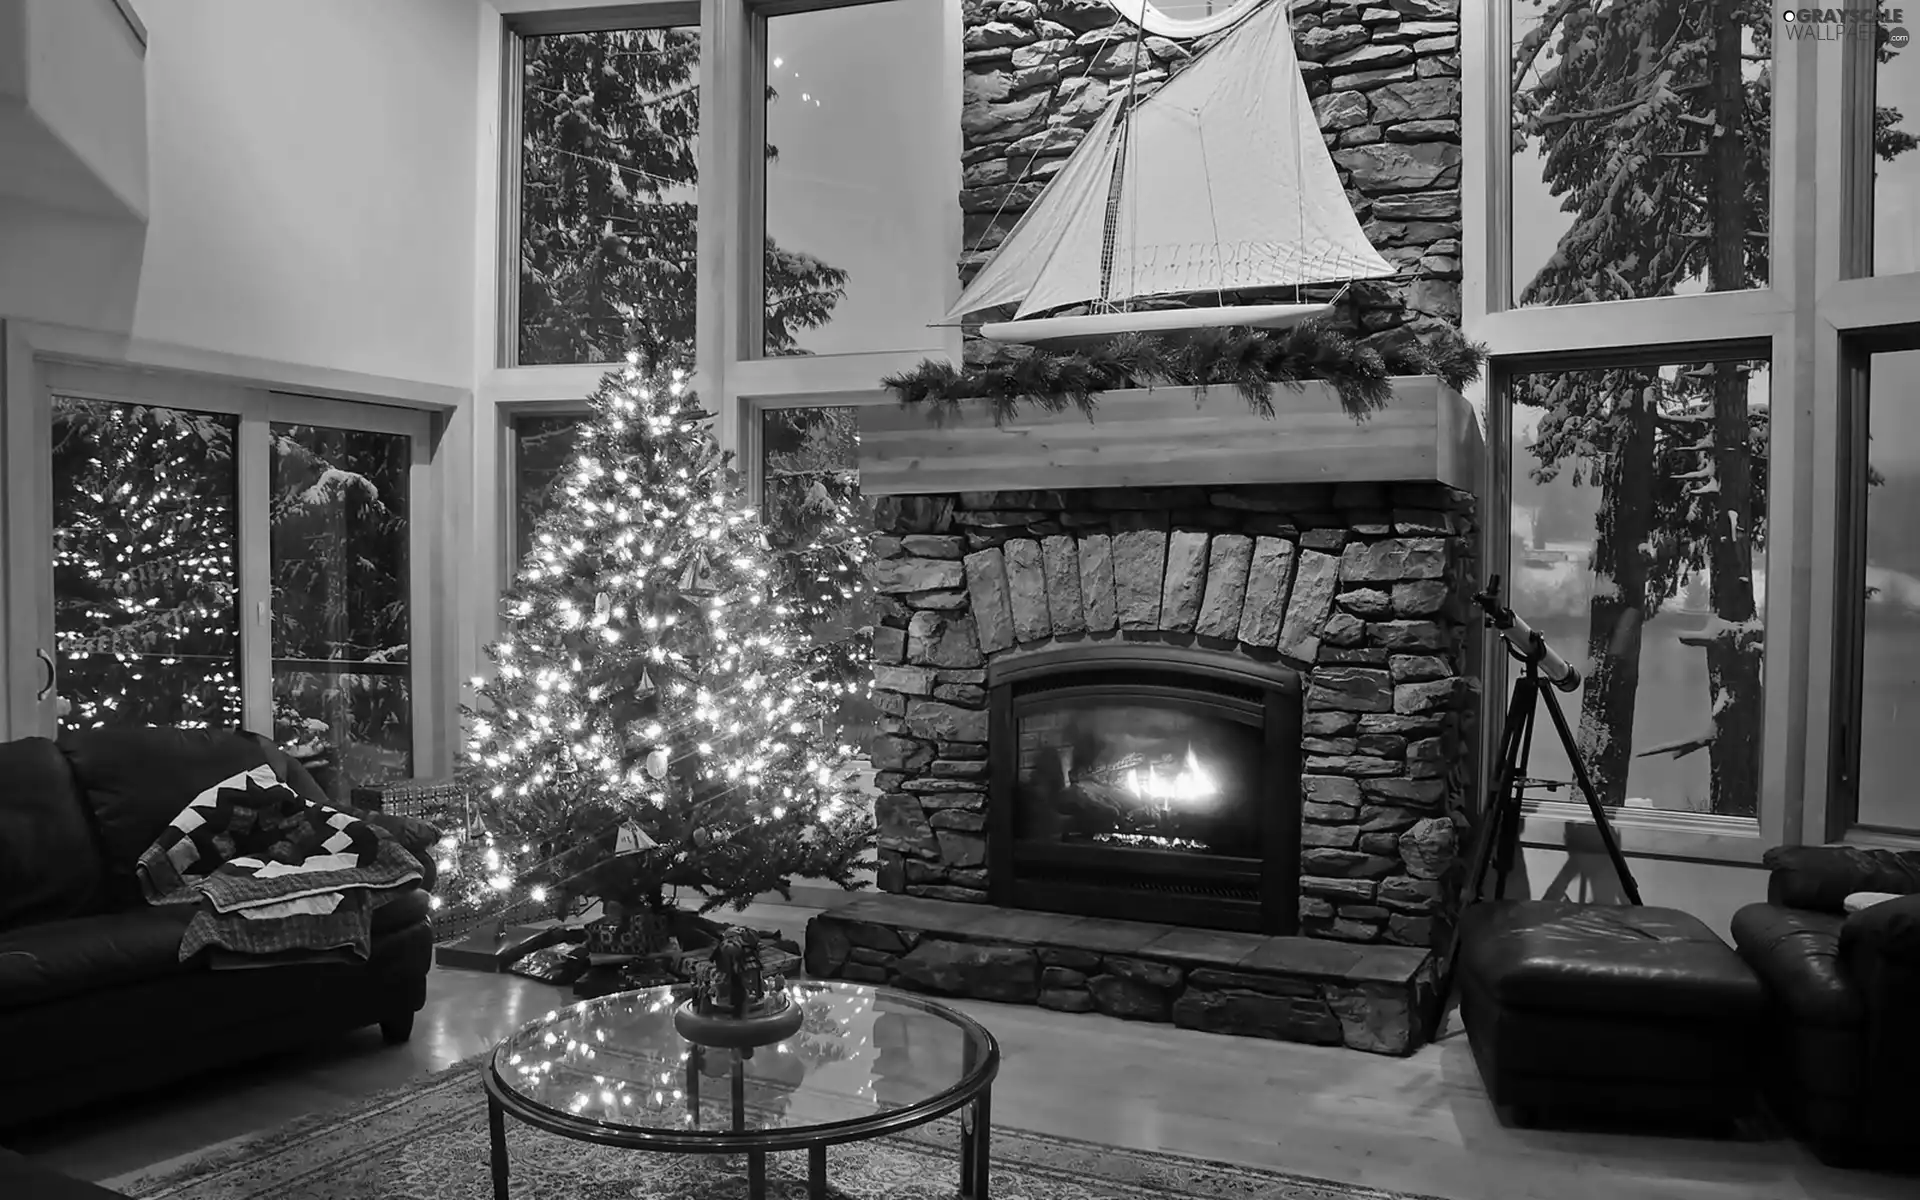 Room, christmas tree, burner chimney